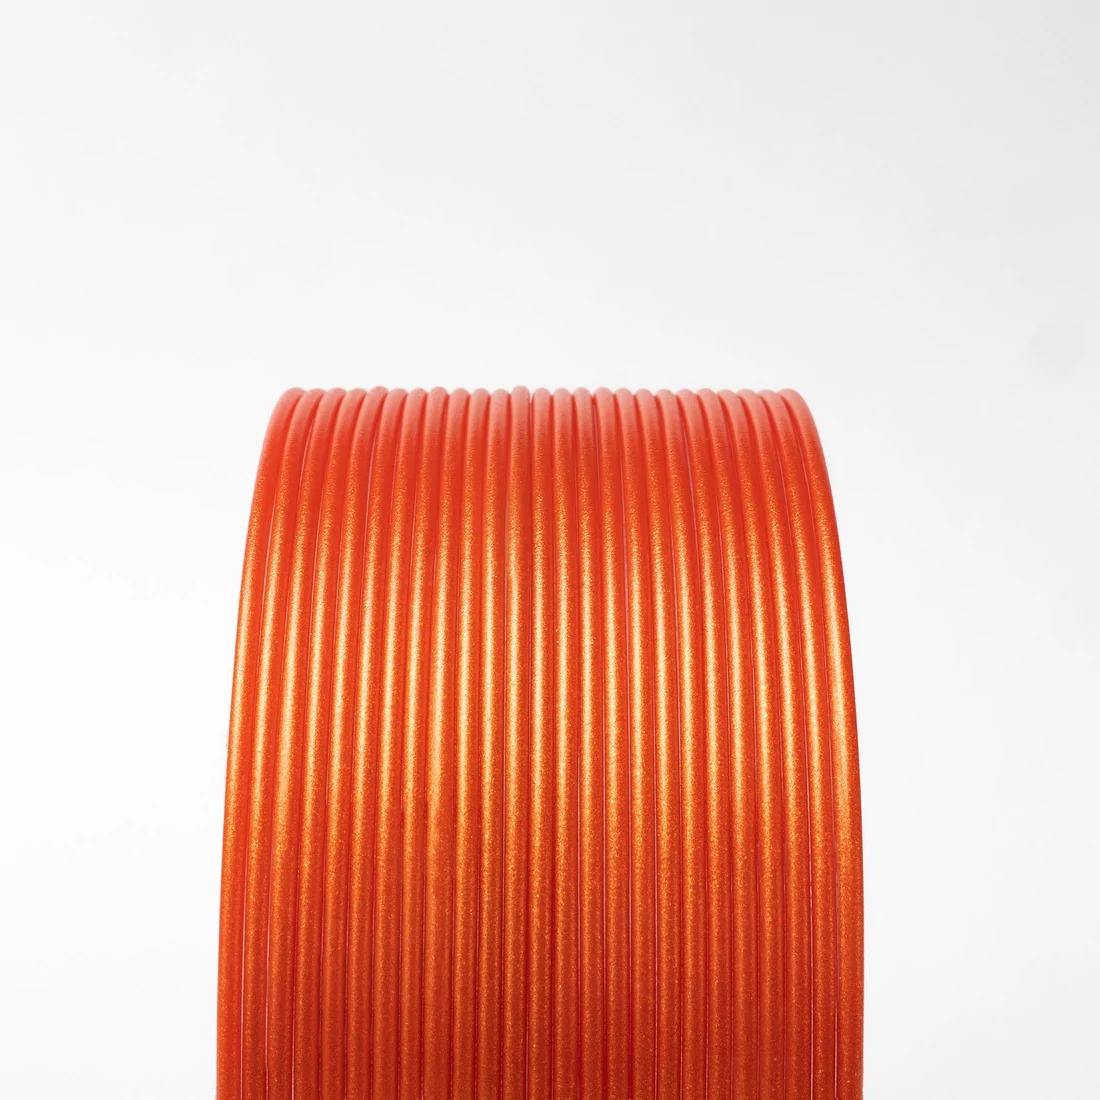 Tangerine Orange Metallic Gold HTPLA  Proto-pasta 2.85mm 500gms 3D printing filament